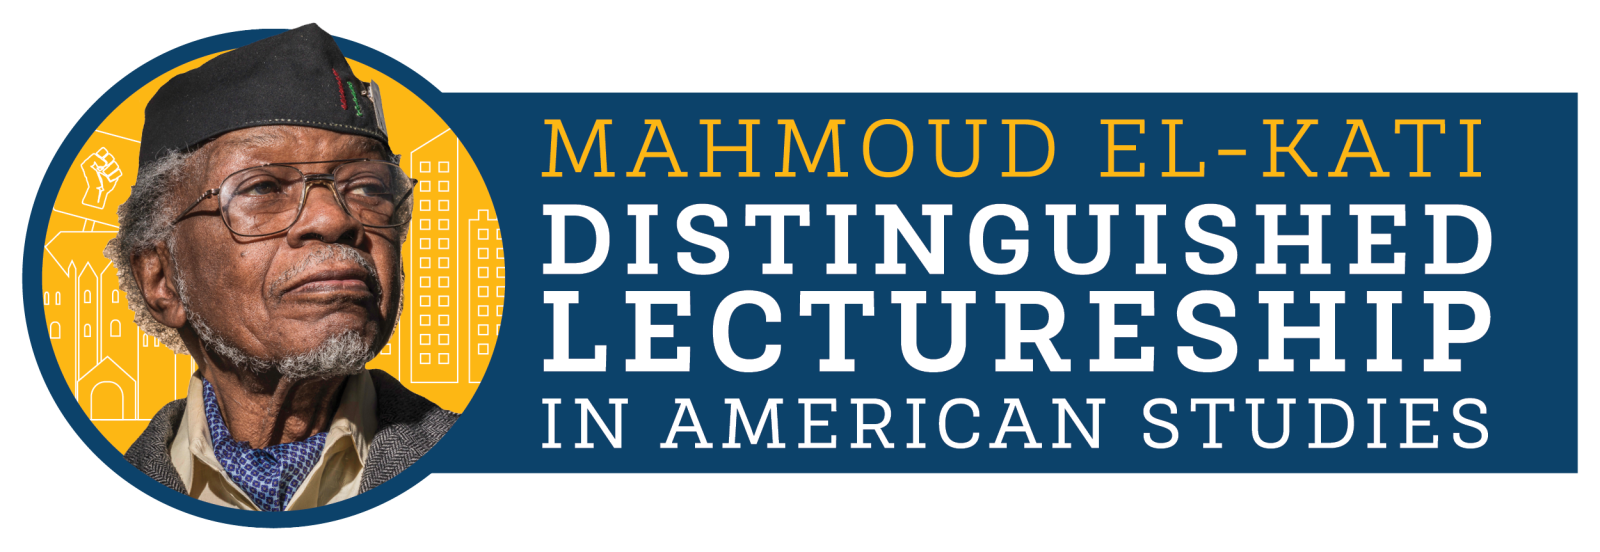 Photo of Mahmoud El-Kati on a banner that reads "Mahmoud El-Kati Distinguished Lectureship in American Studies"